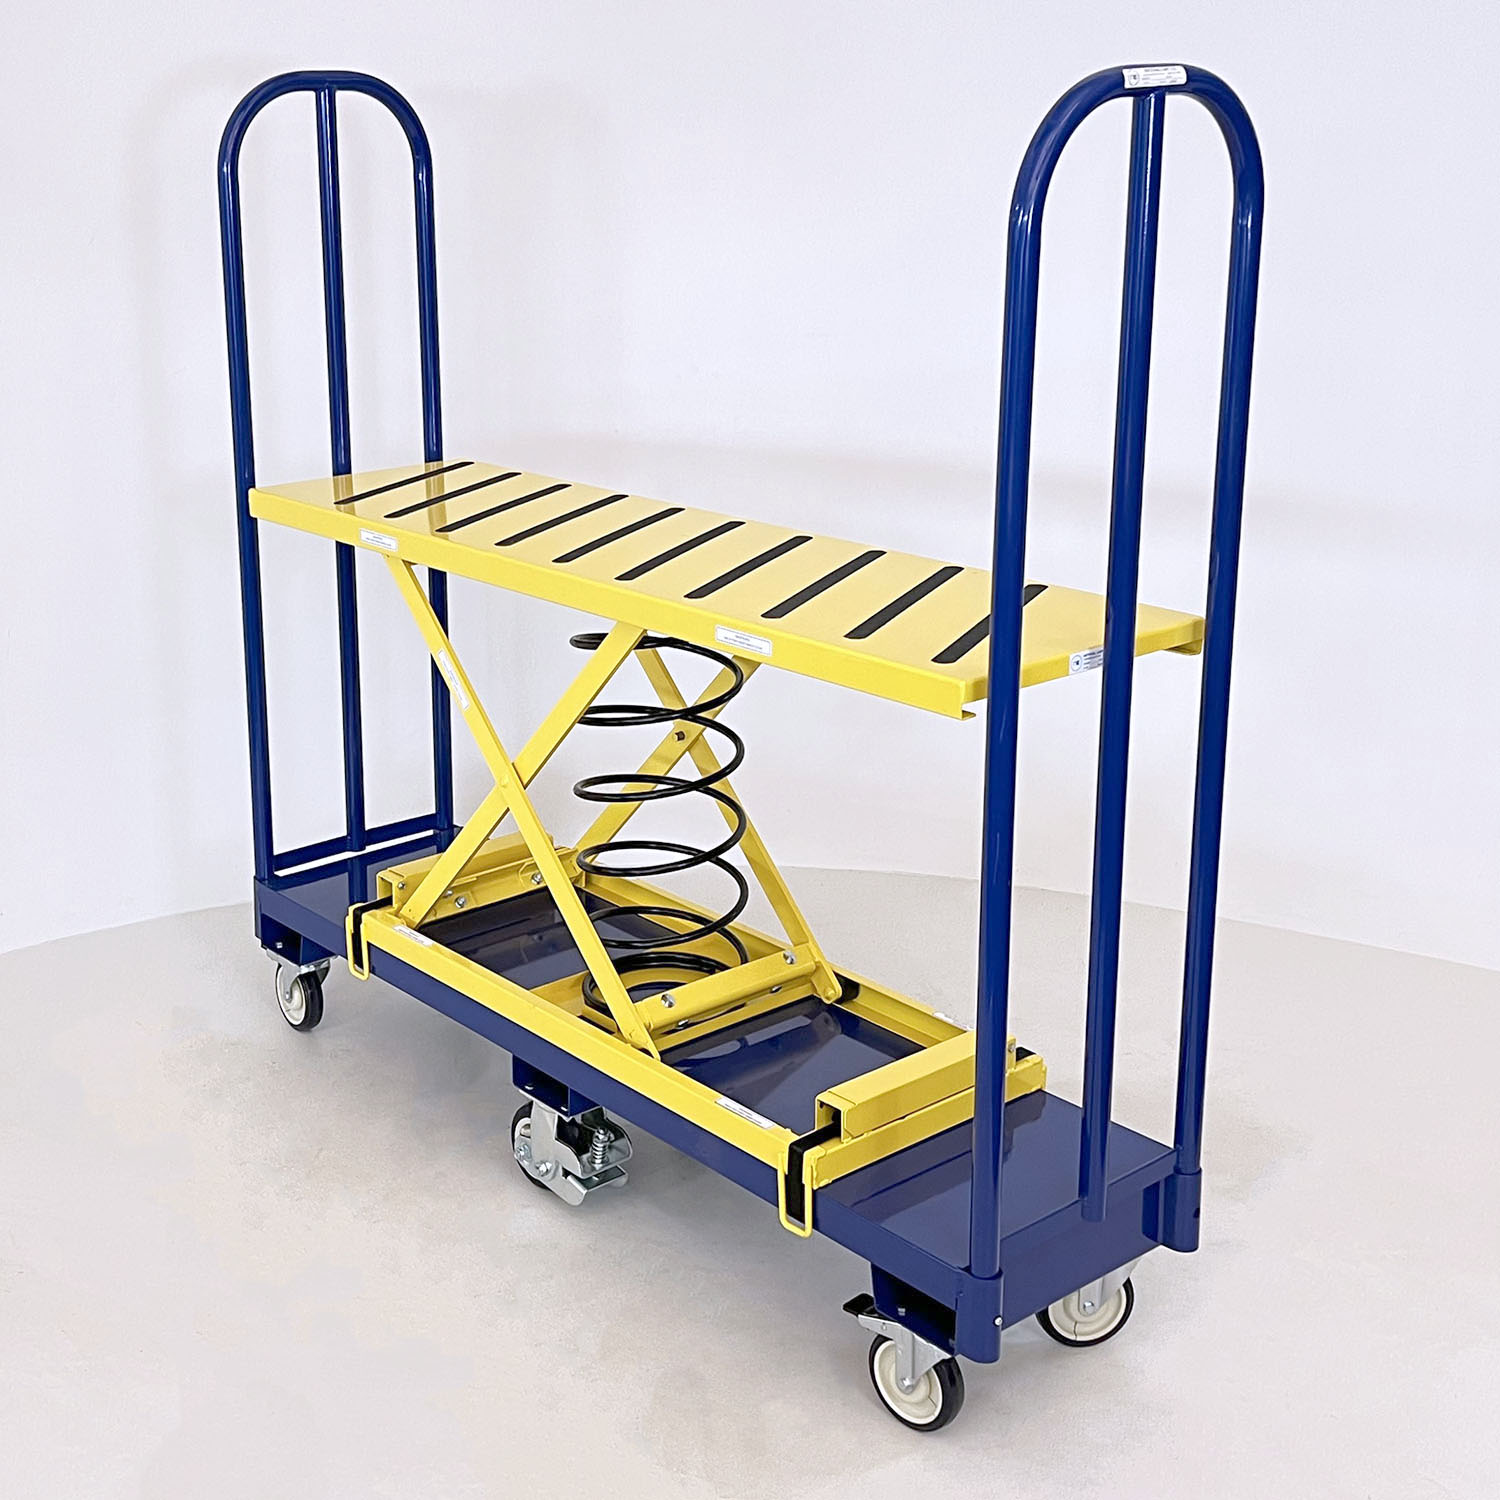 Self-Leveling Carts u boat industrial cart picking cart material handling stock cart fulfilment cart